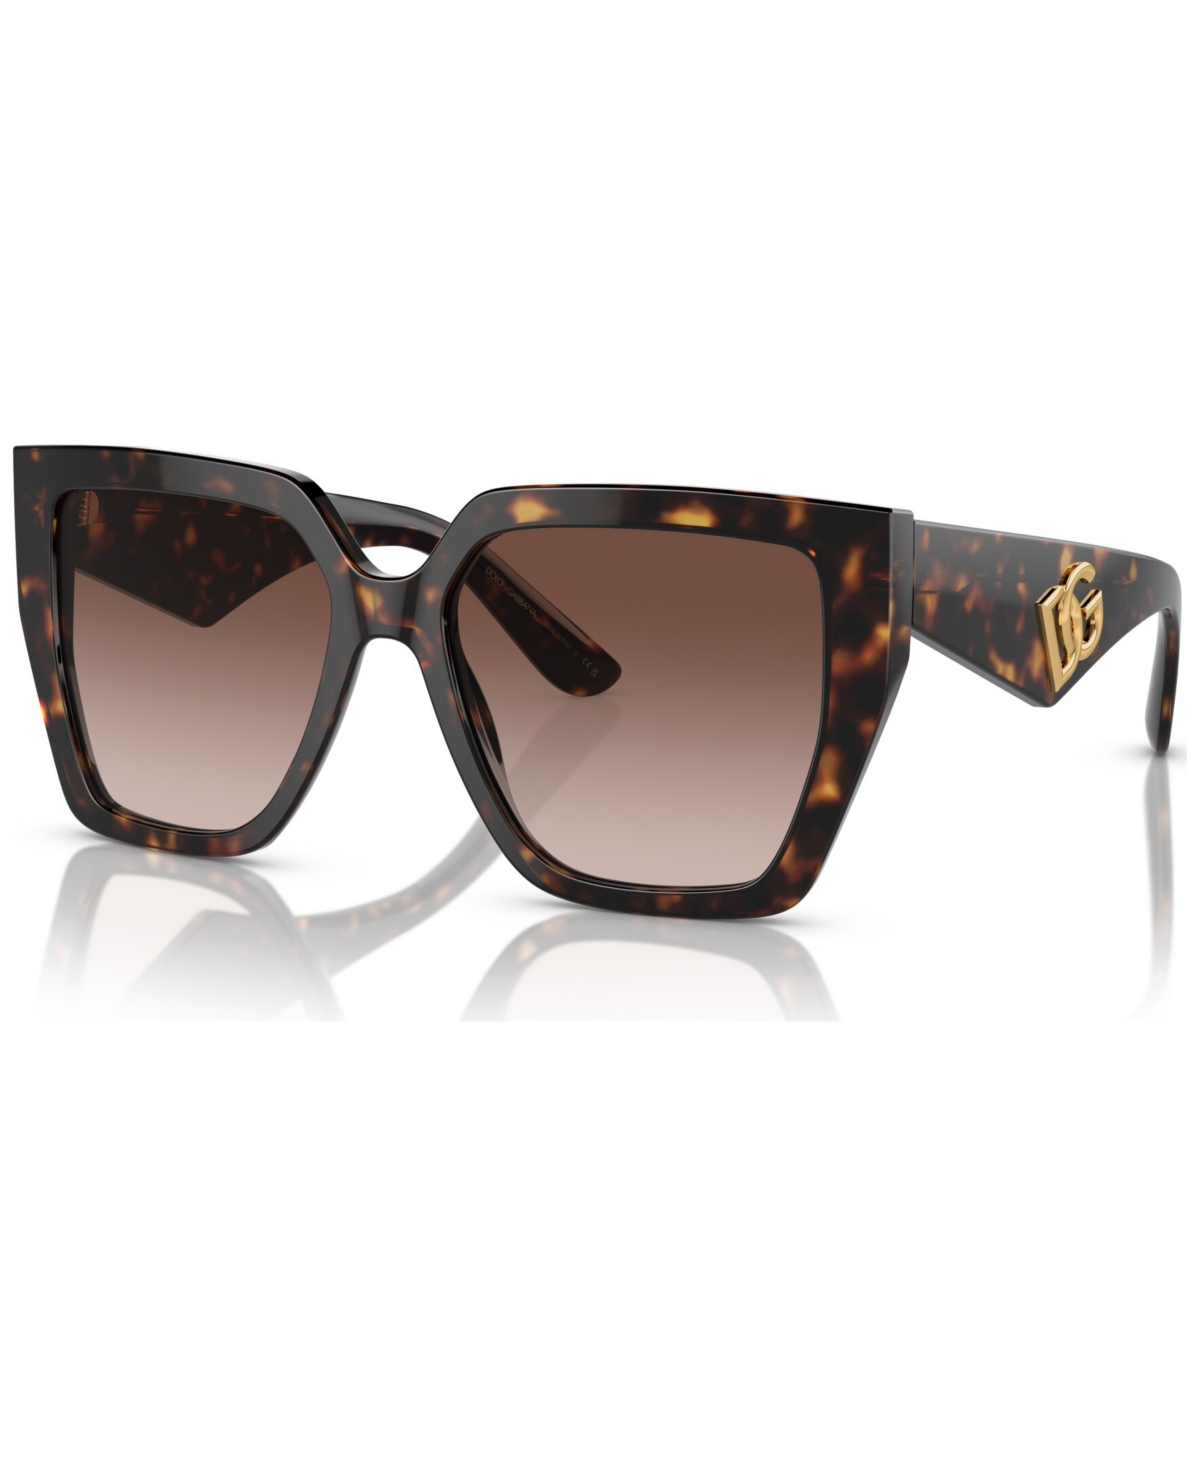 Dolce&Gabbana Women's Sunglasses, DG4438 - Havana